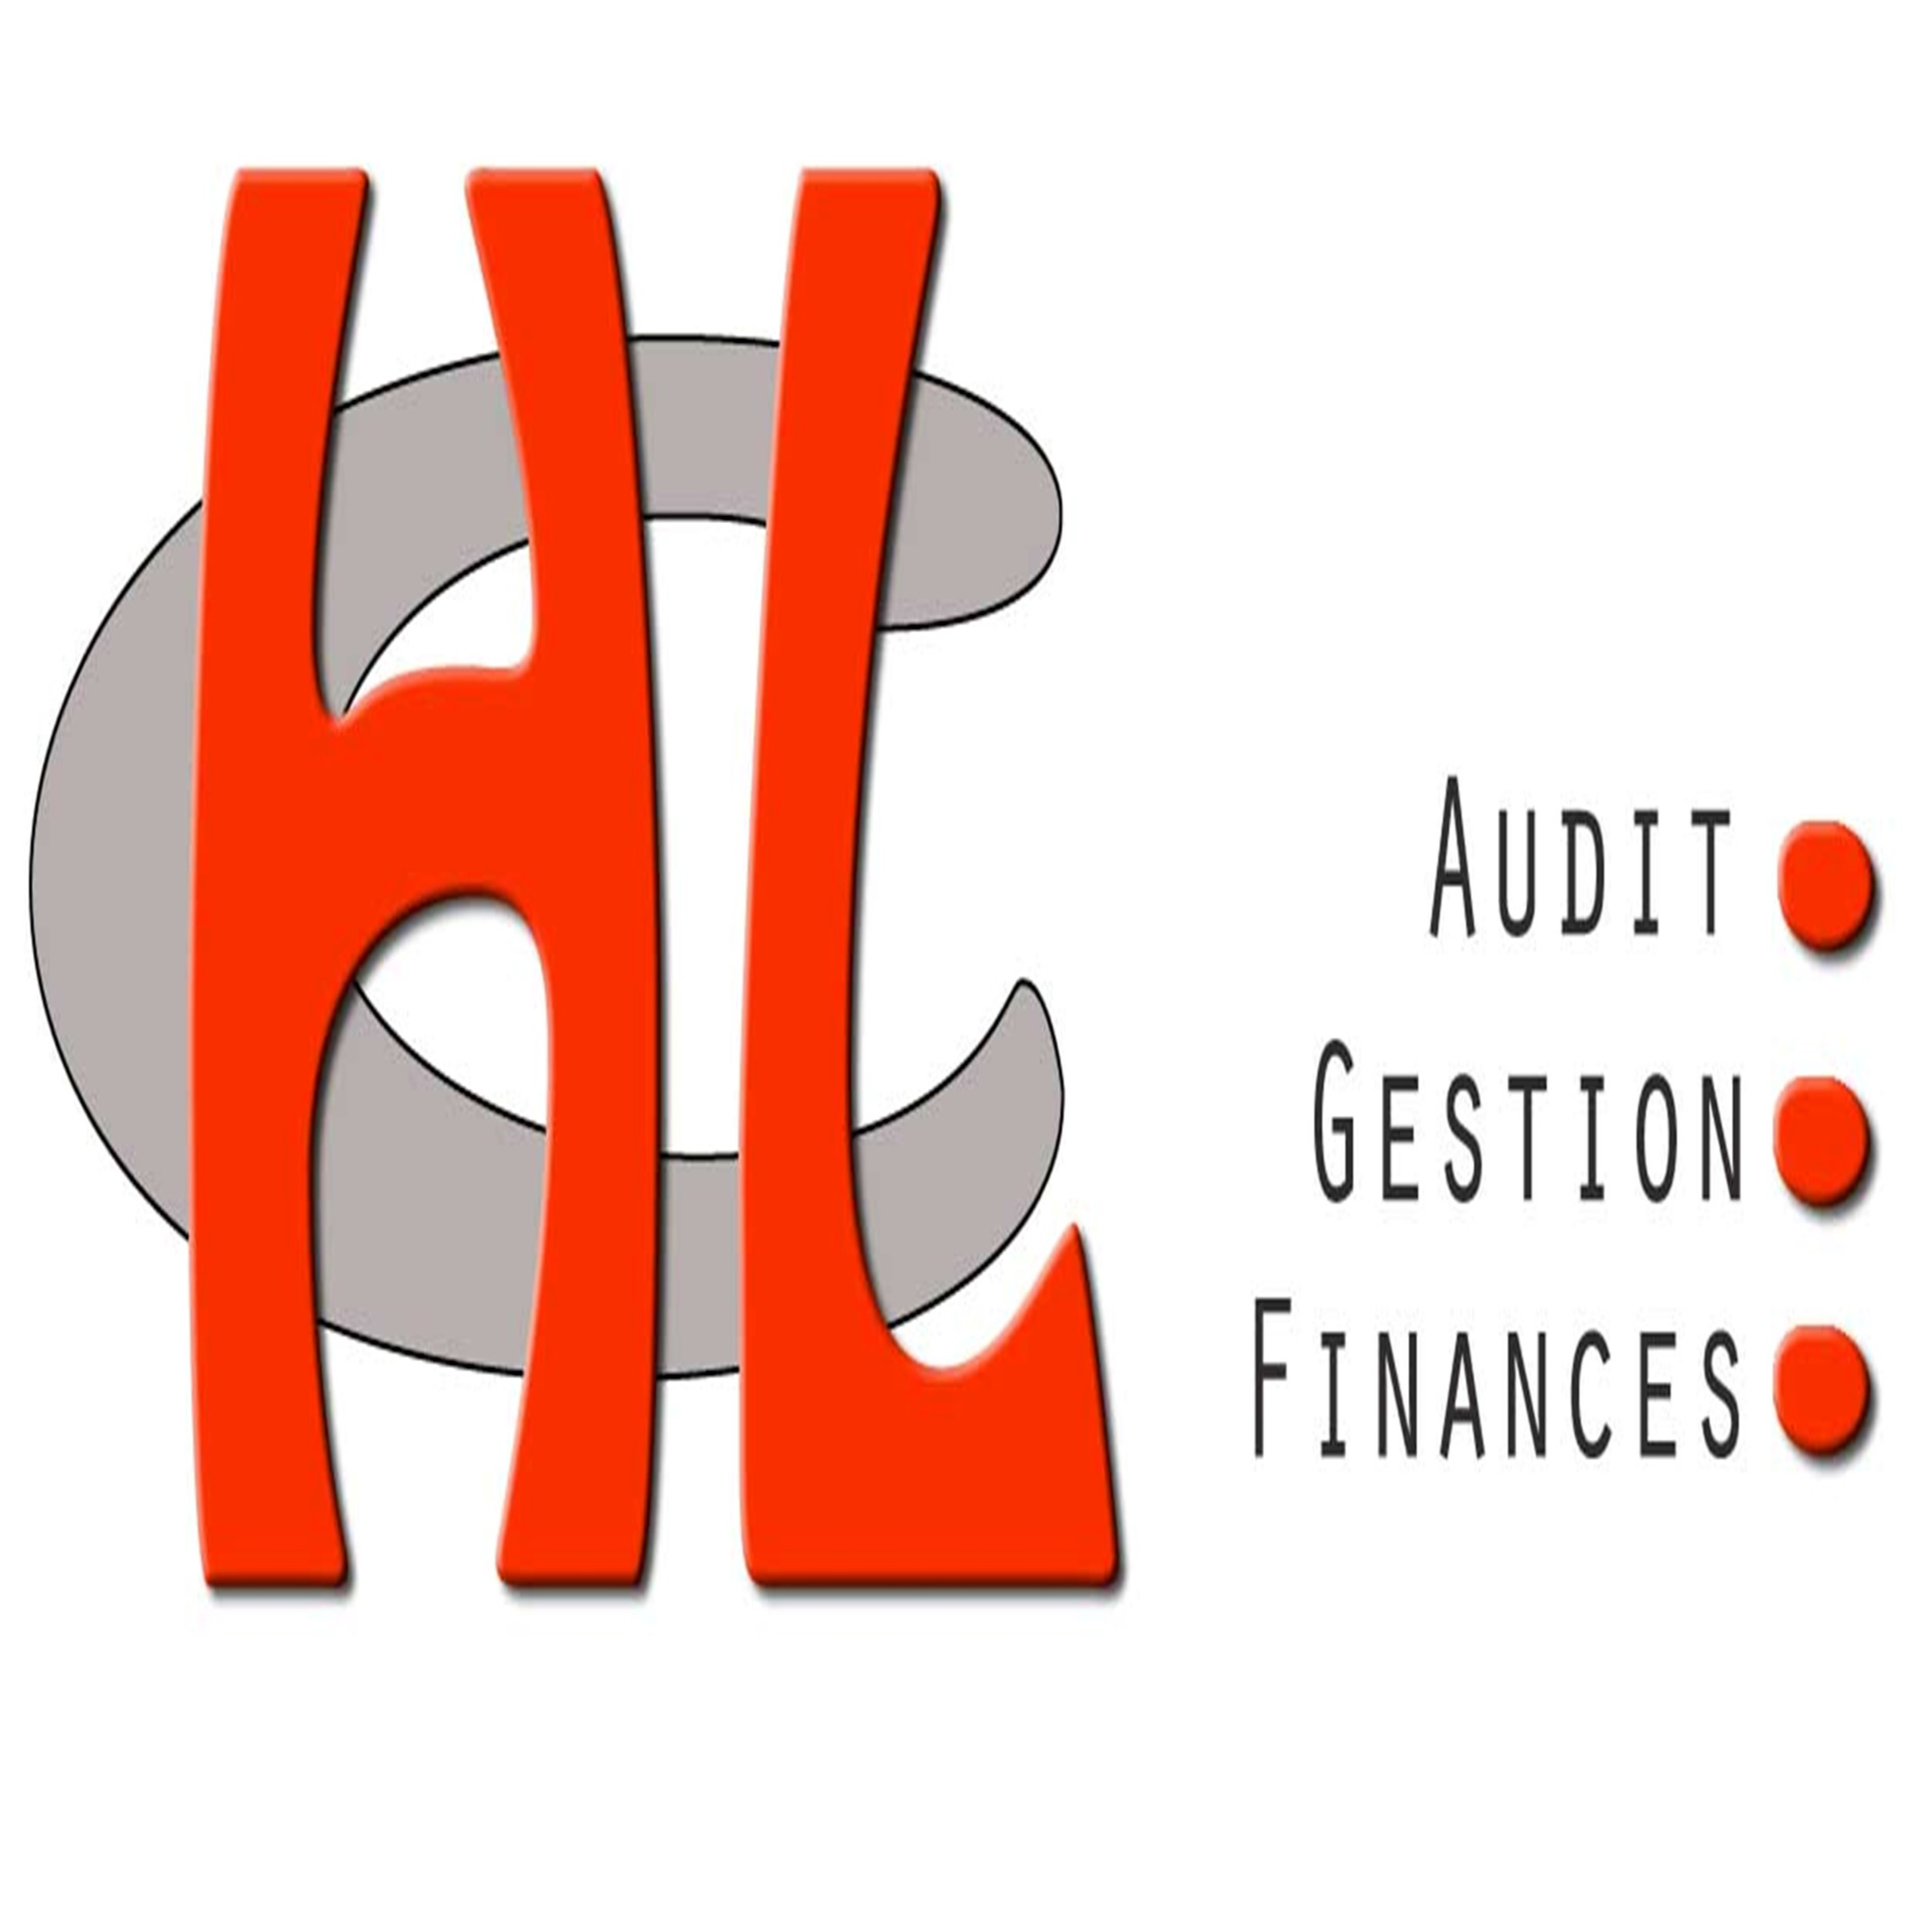 CHL AUDIT GESTION FINANCES – Expert-comptable logo